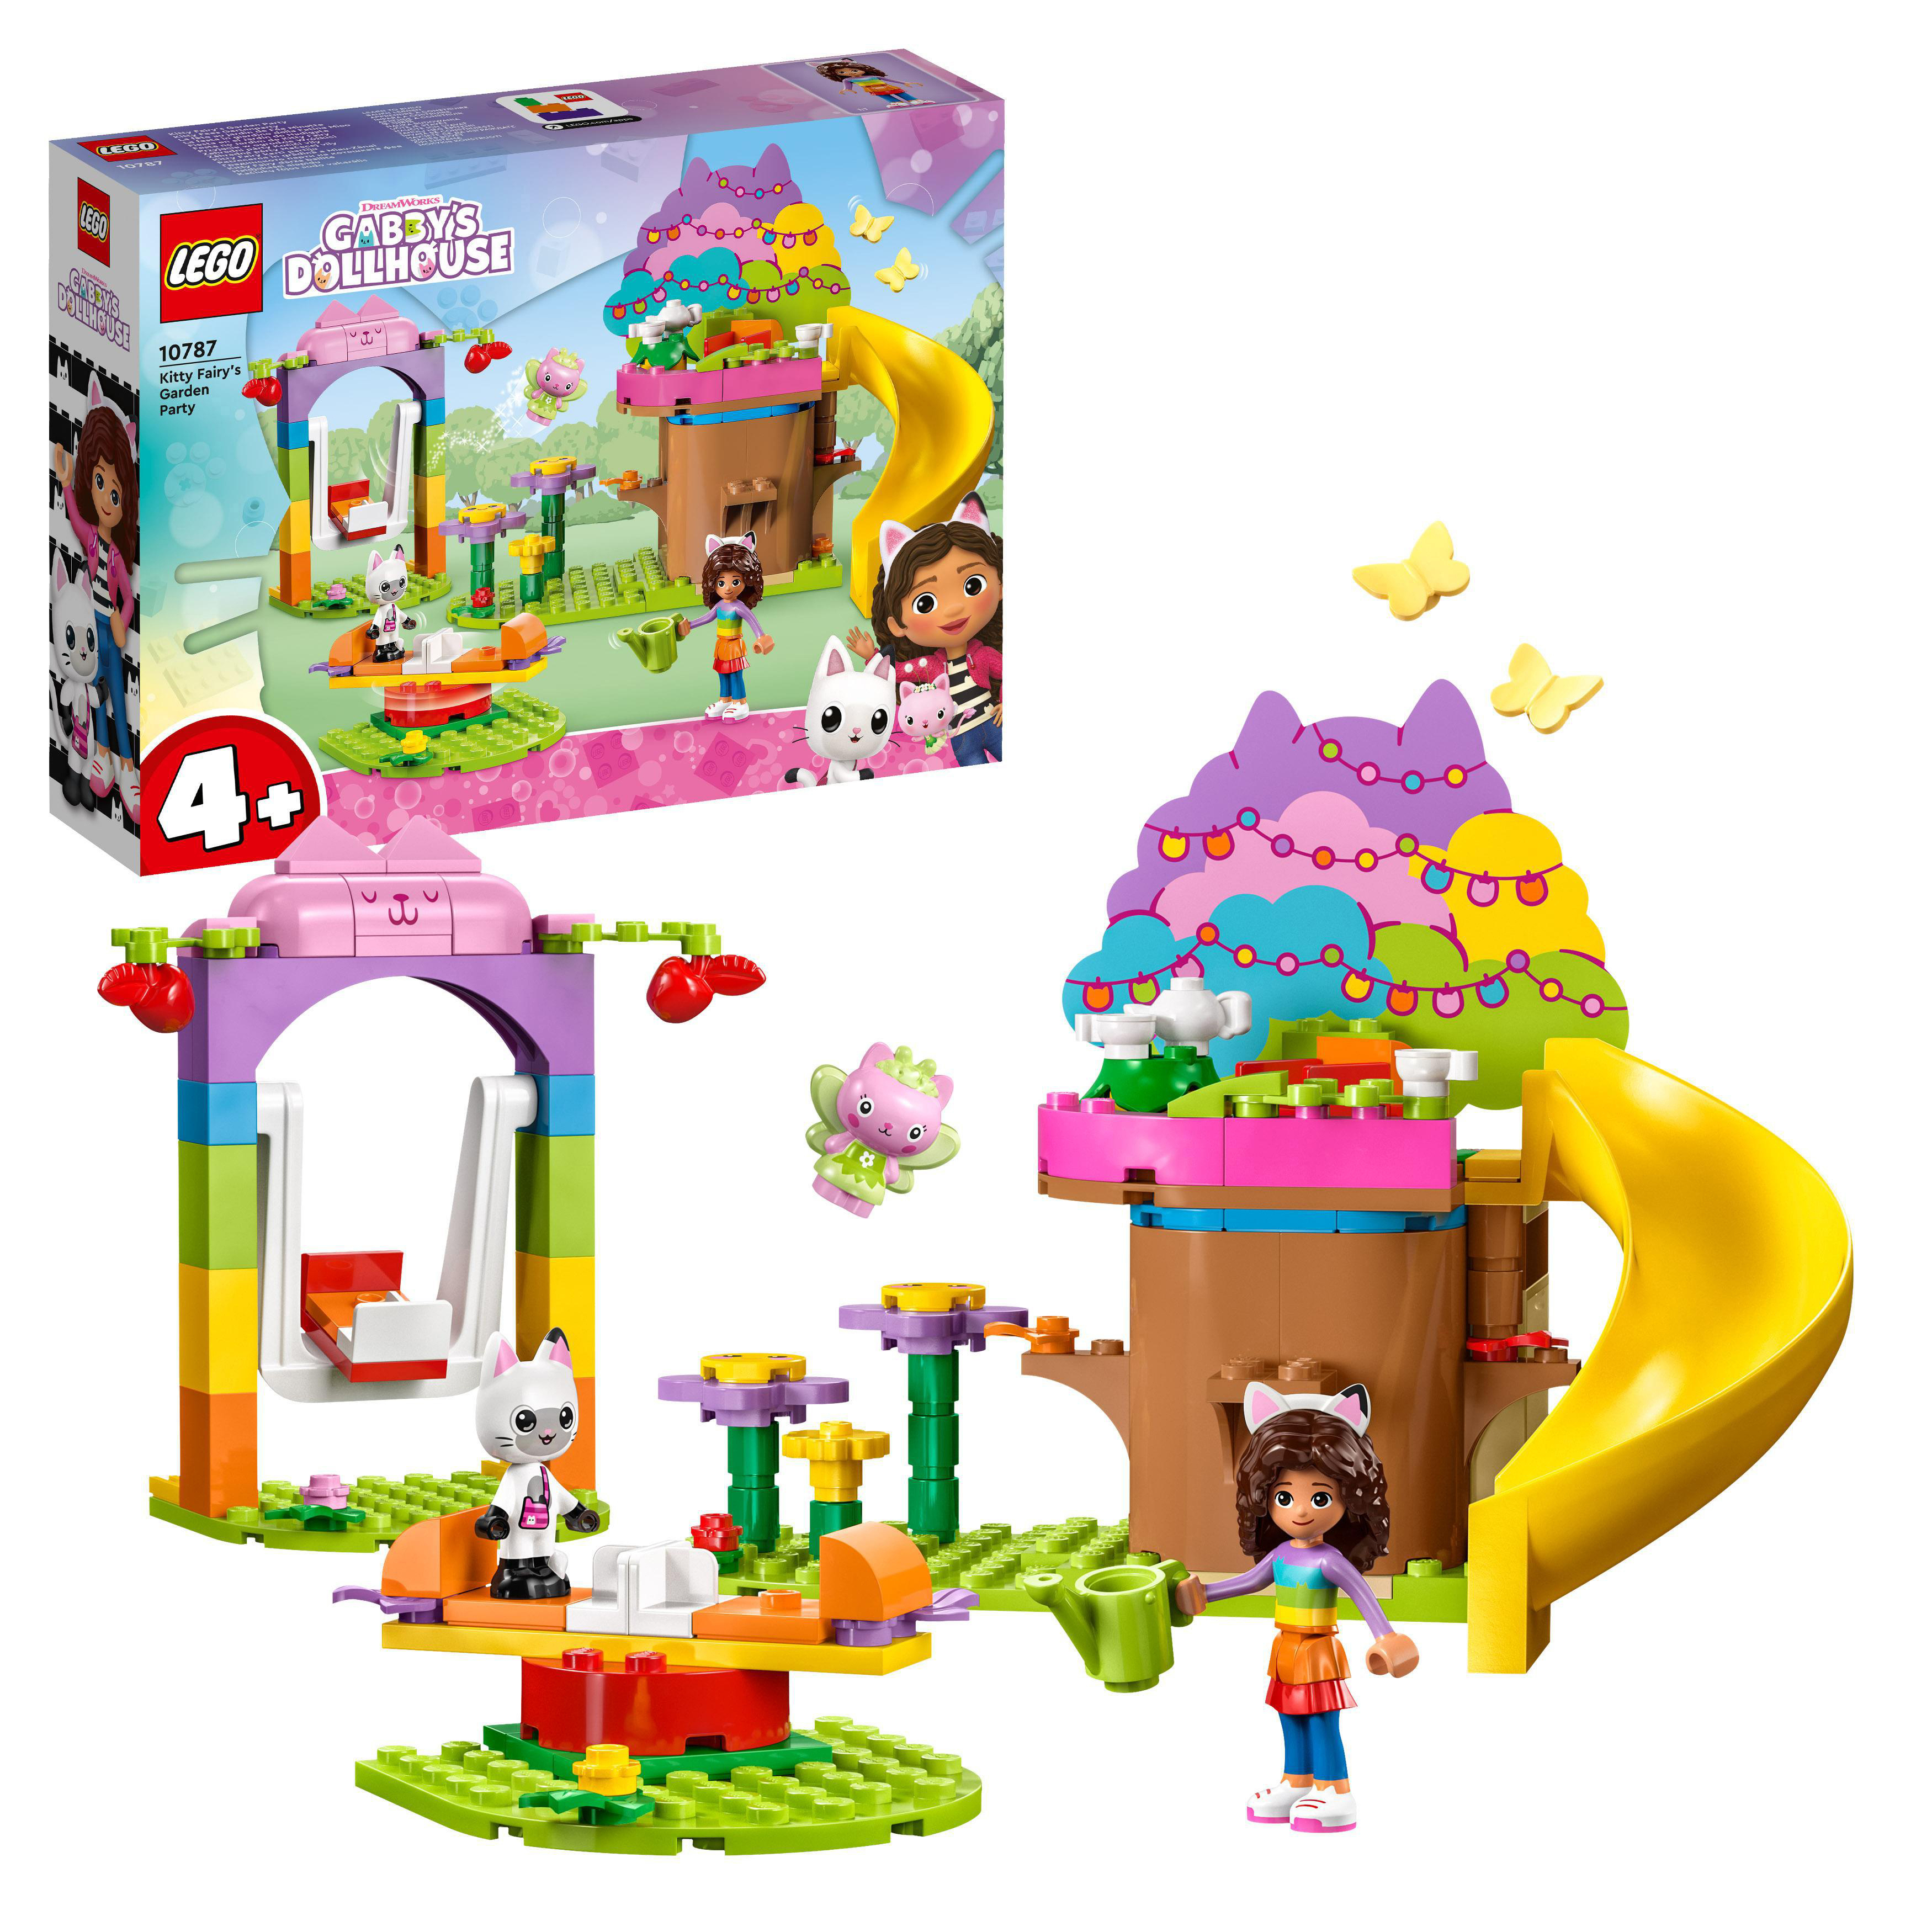 LEGO Gabby\'s Dollhouse Fees Mehrfarbig Bausatz, Kitty 10787 Gartenparty